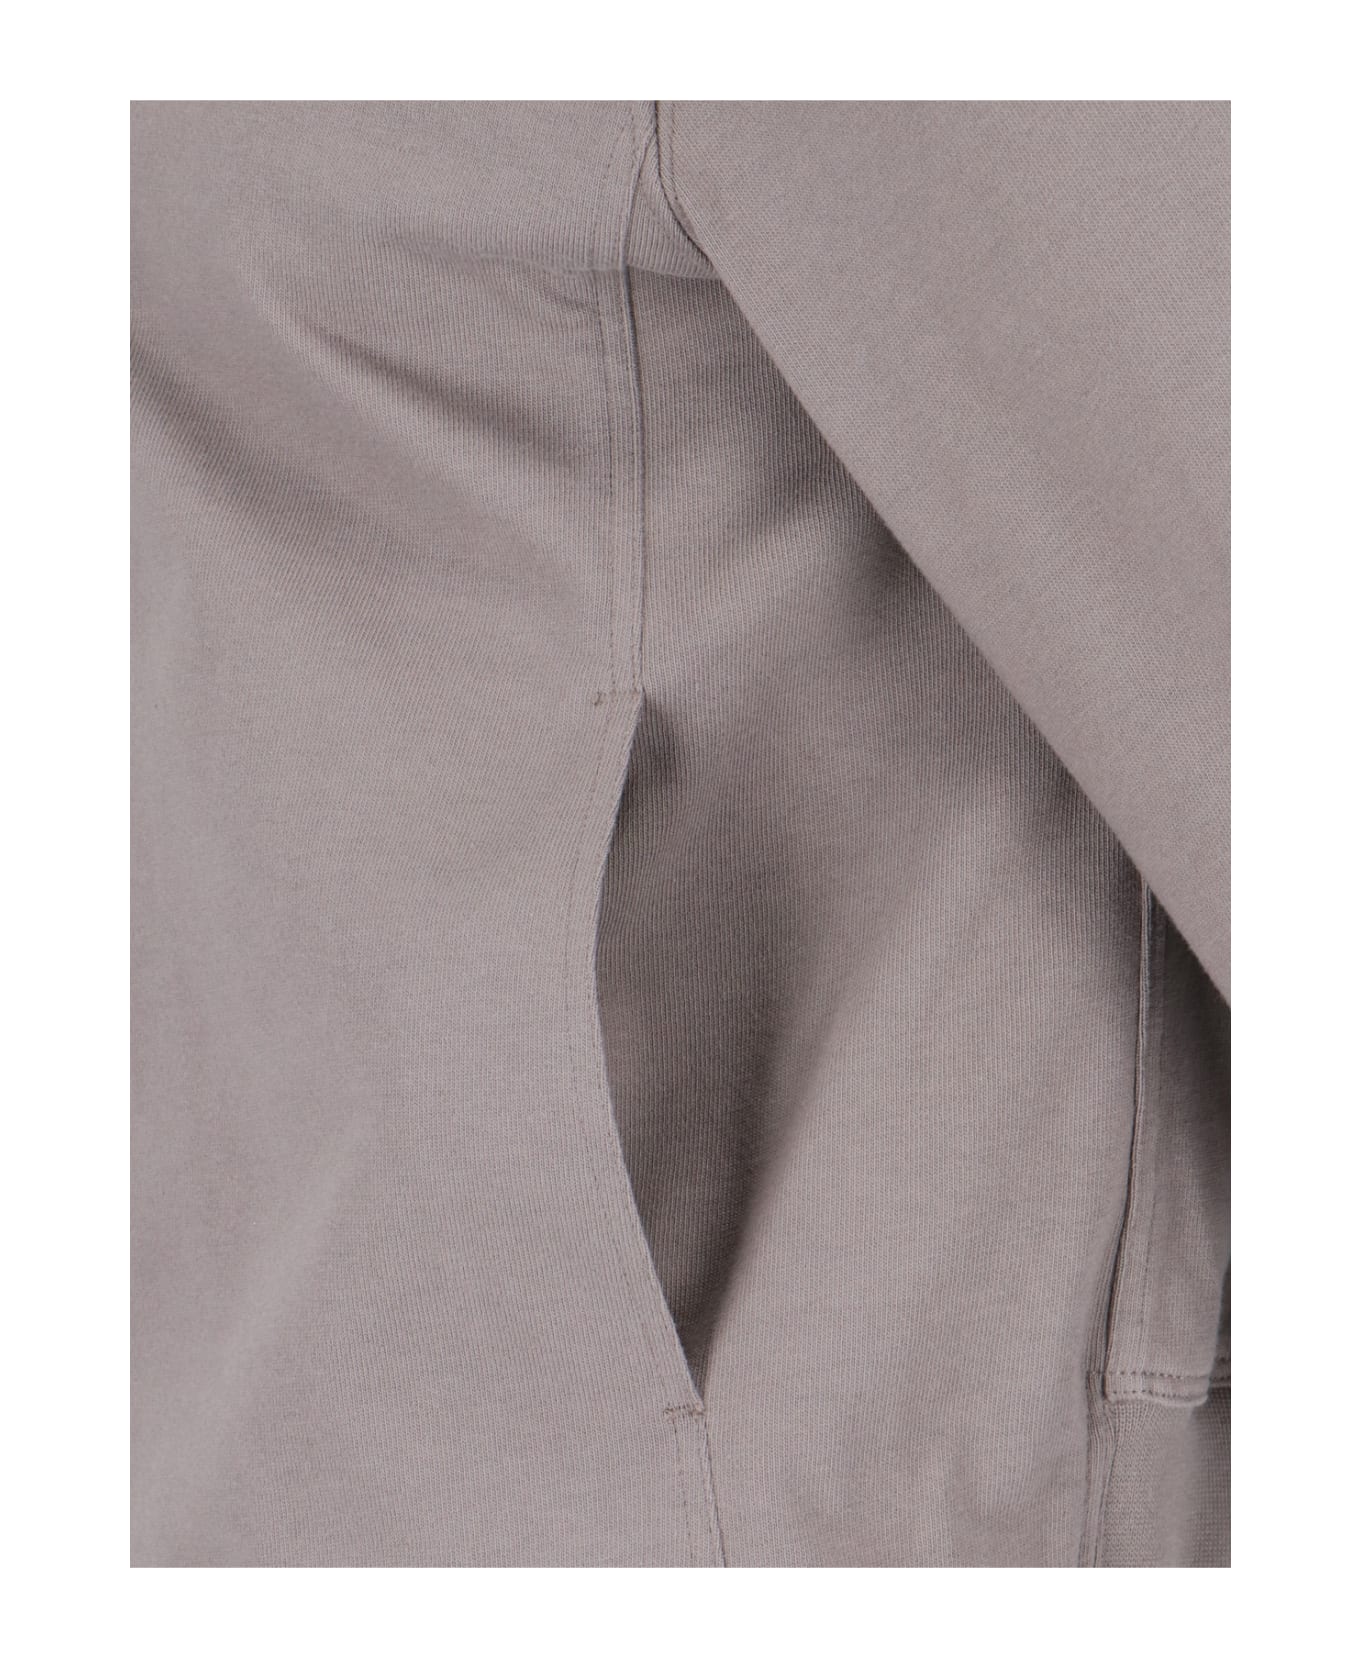 Rick Owens Asymmetrical Zip Sweatshirt - Taupe